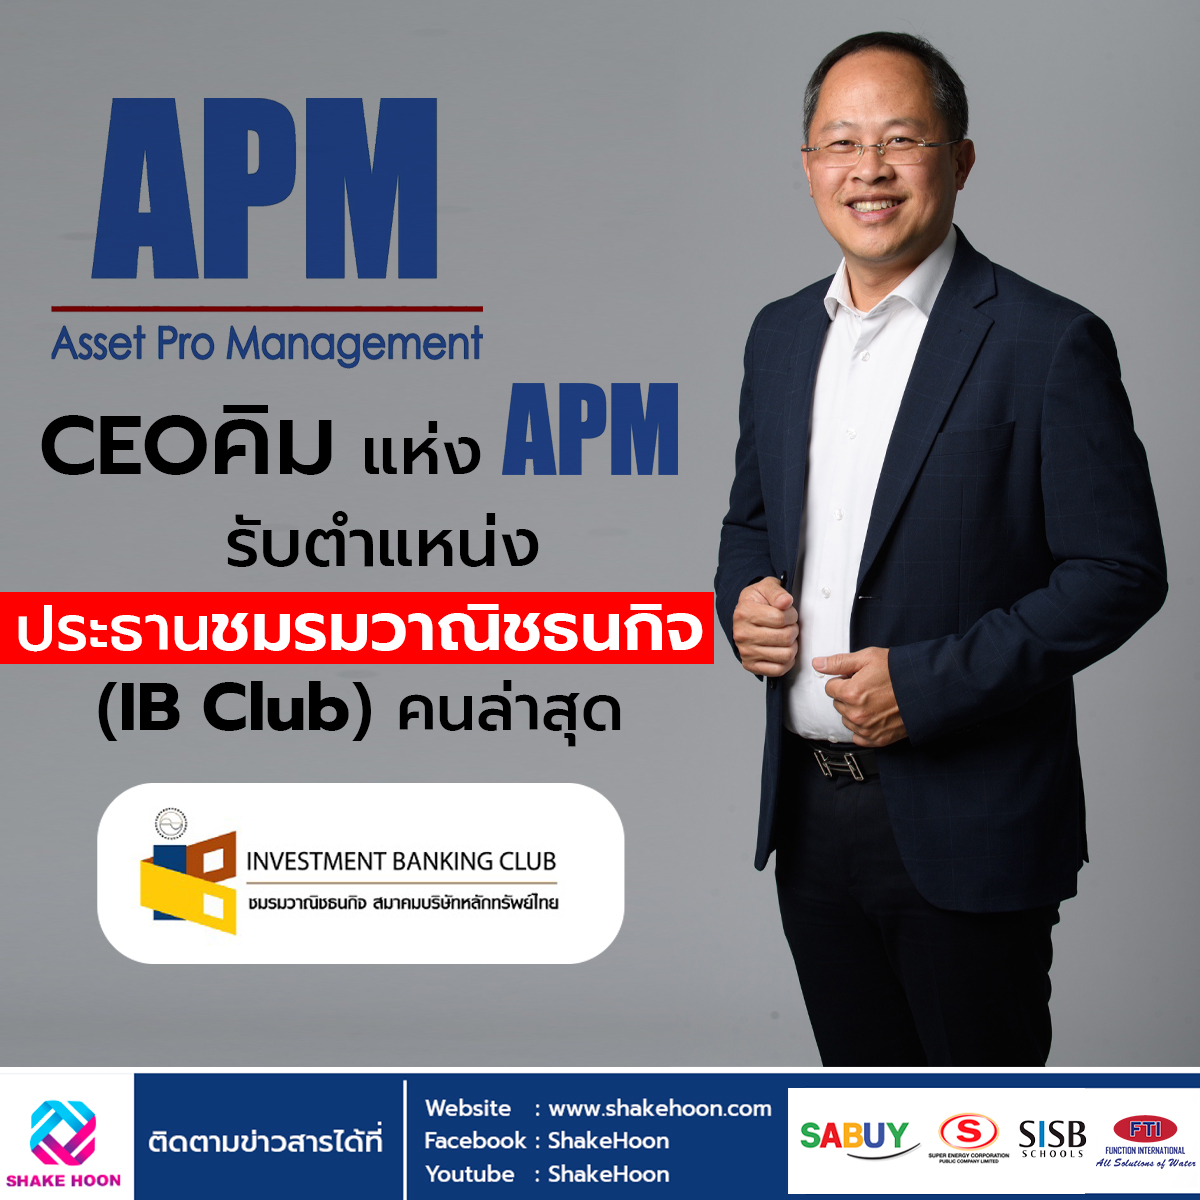 CEOคิม แห่ง APM รับตำแหน่ง ประธานชมรมวาณิชธนกิจ (IB Club) คนล่าสุด